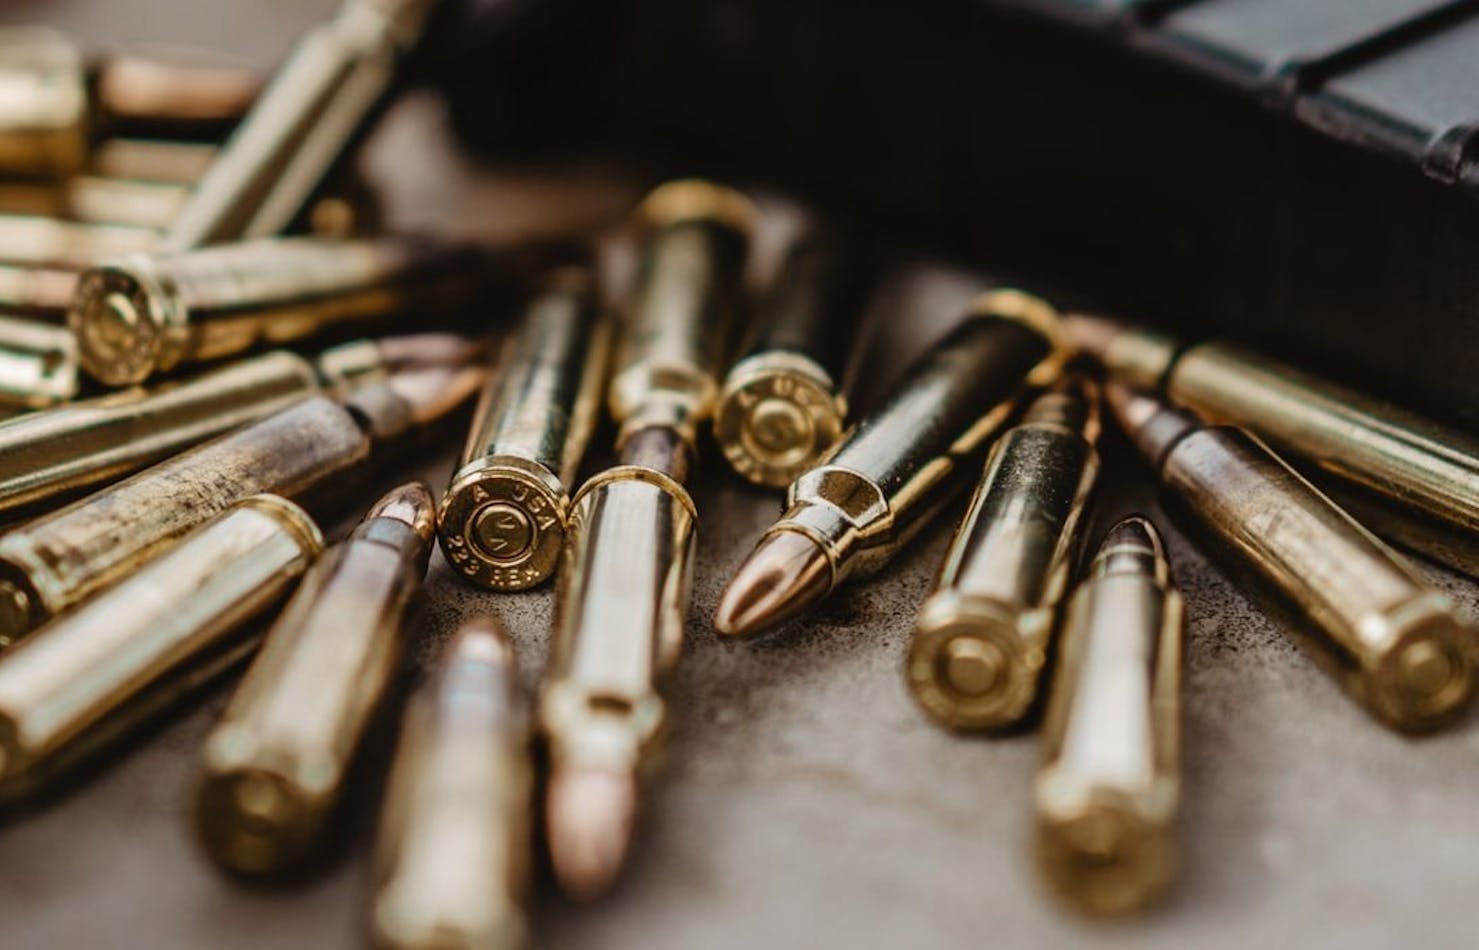 Rifle ammunition